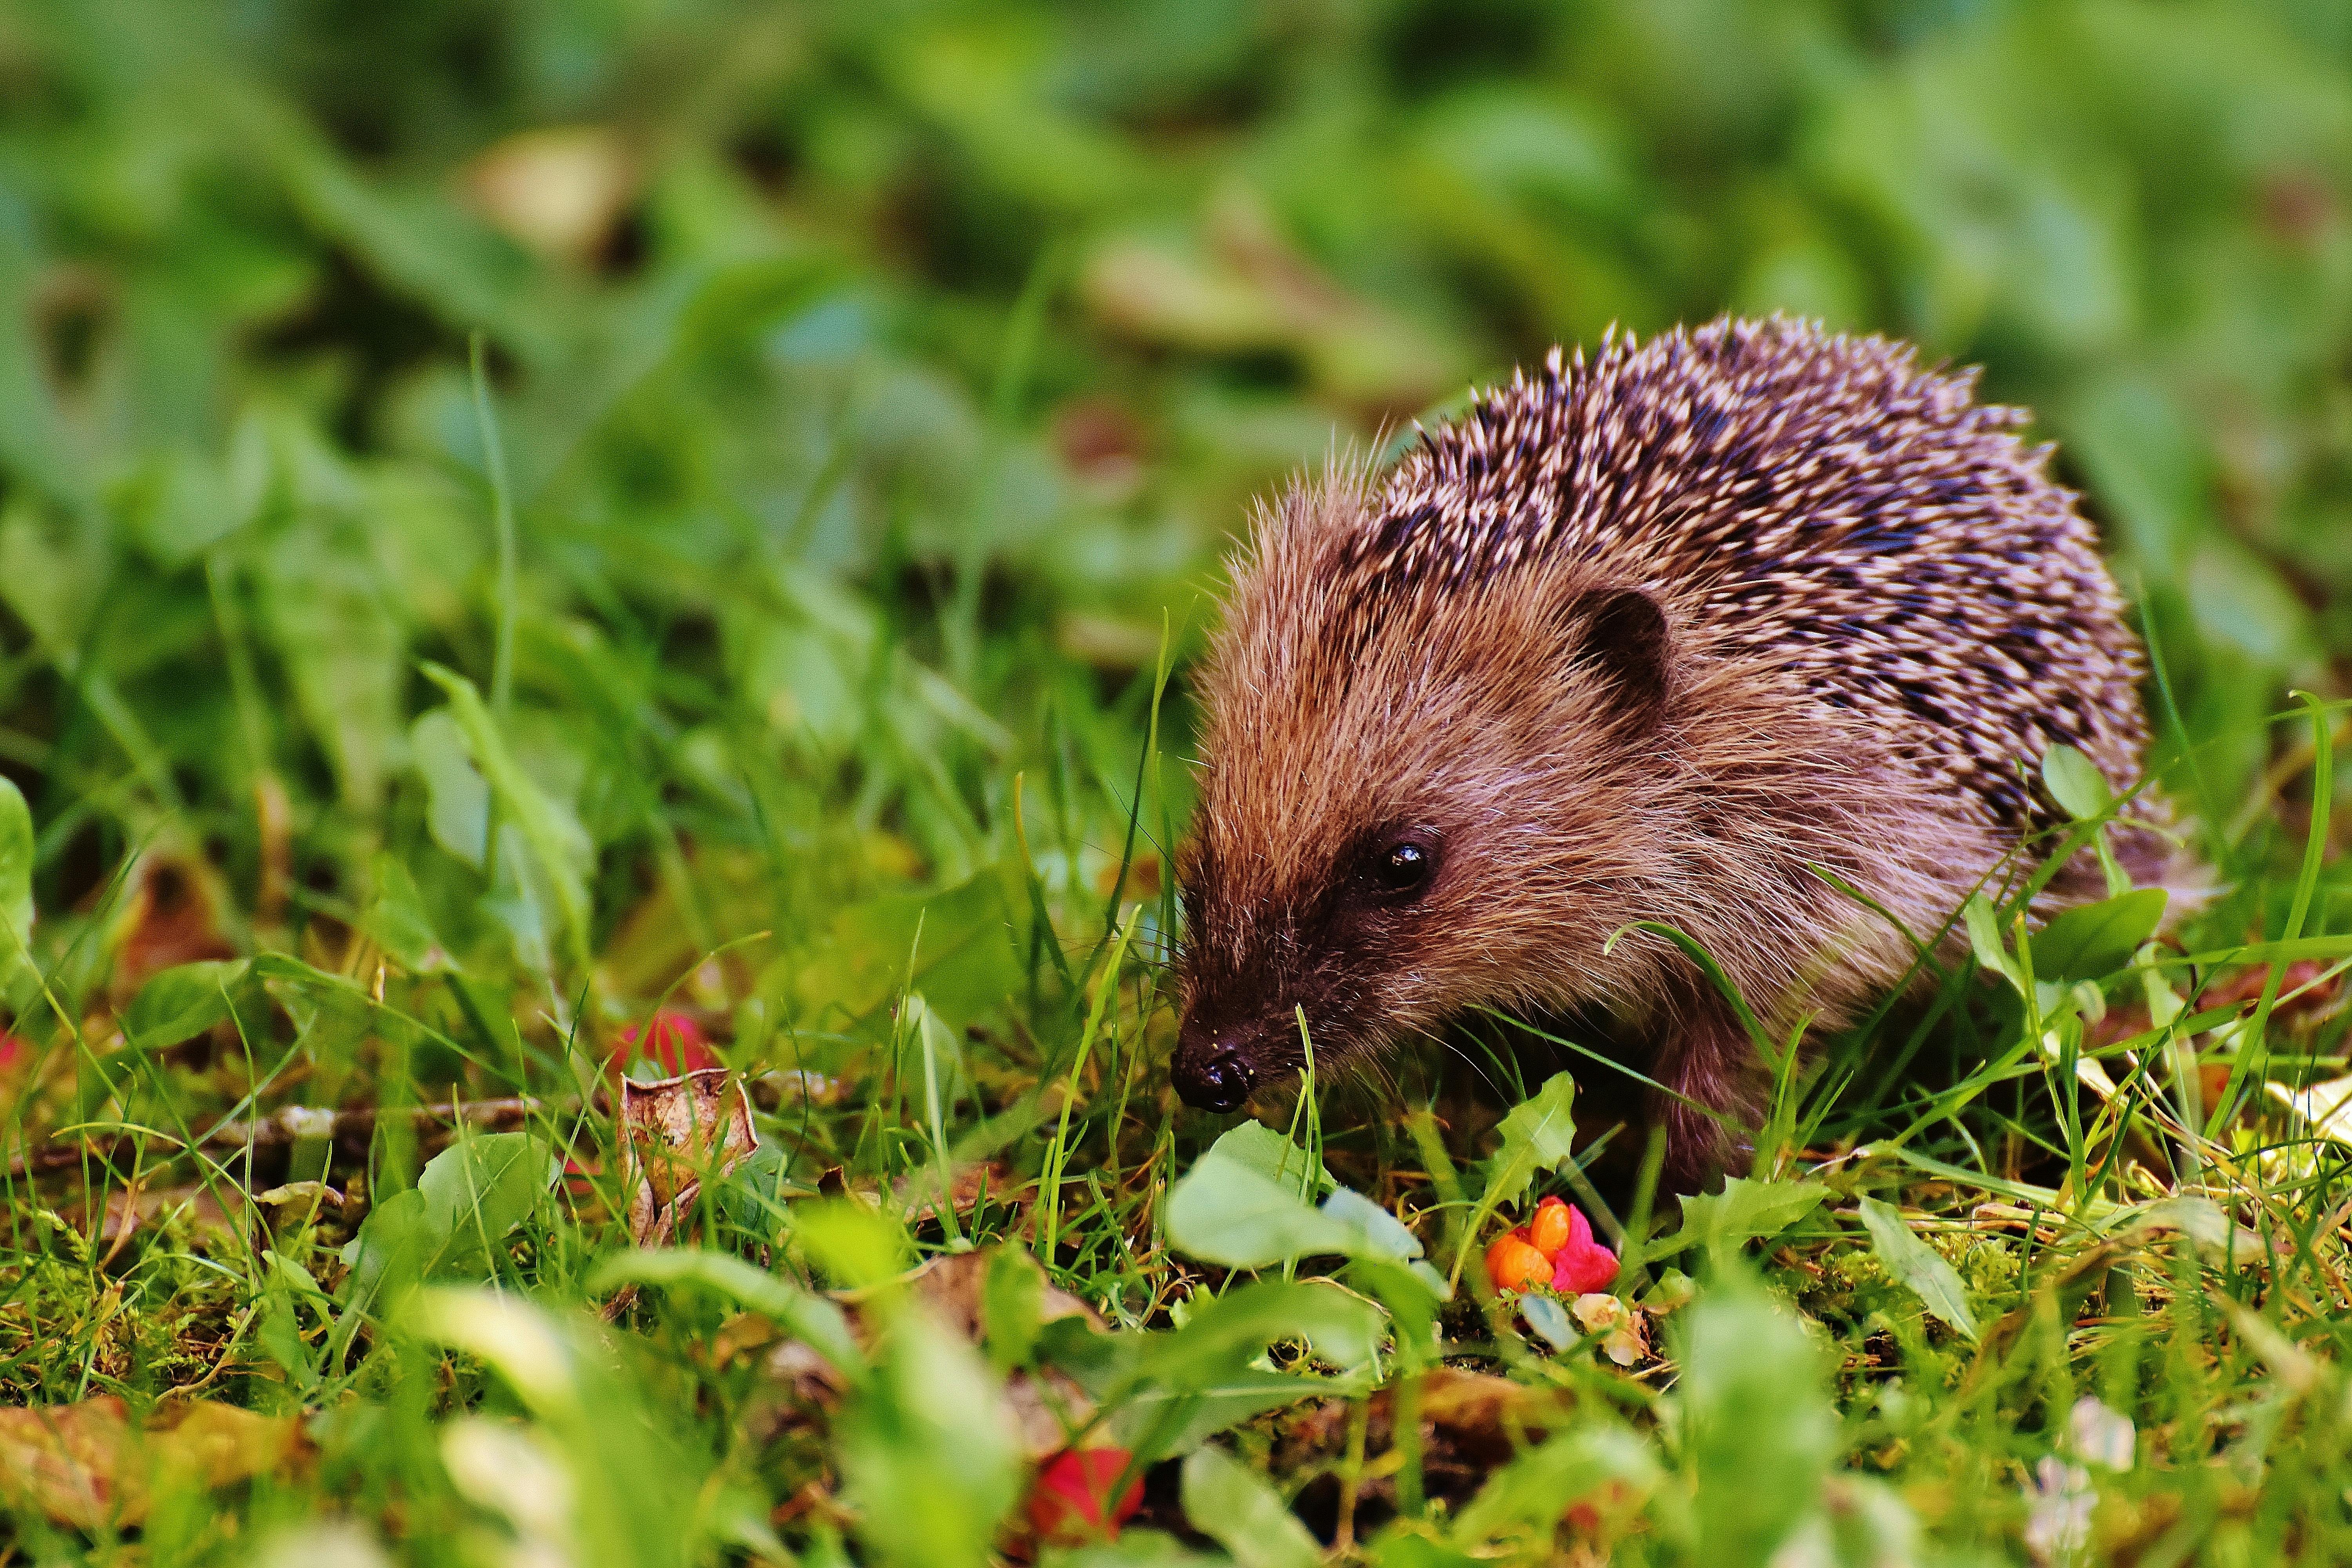 Hedgehog on a grassy field. | Photo: Pexels